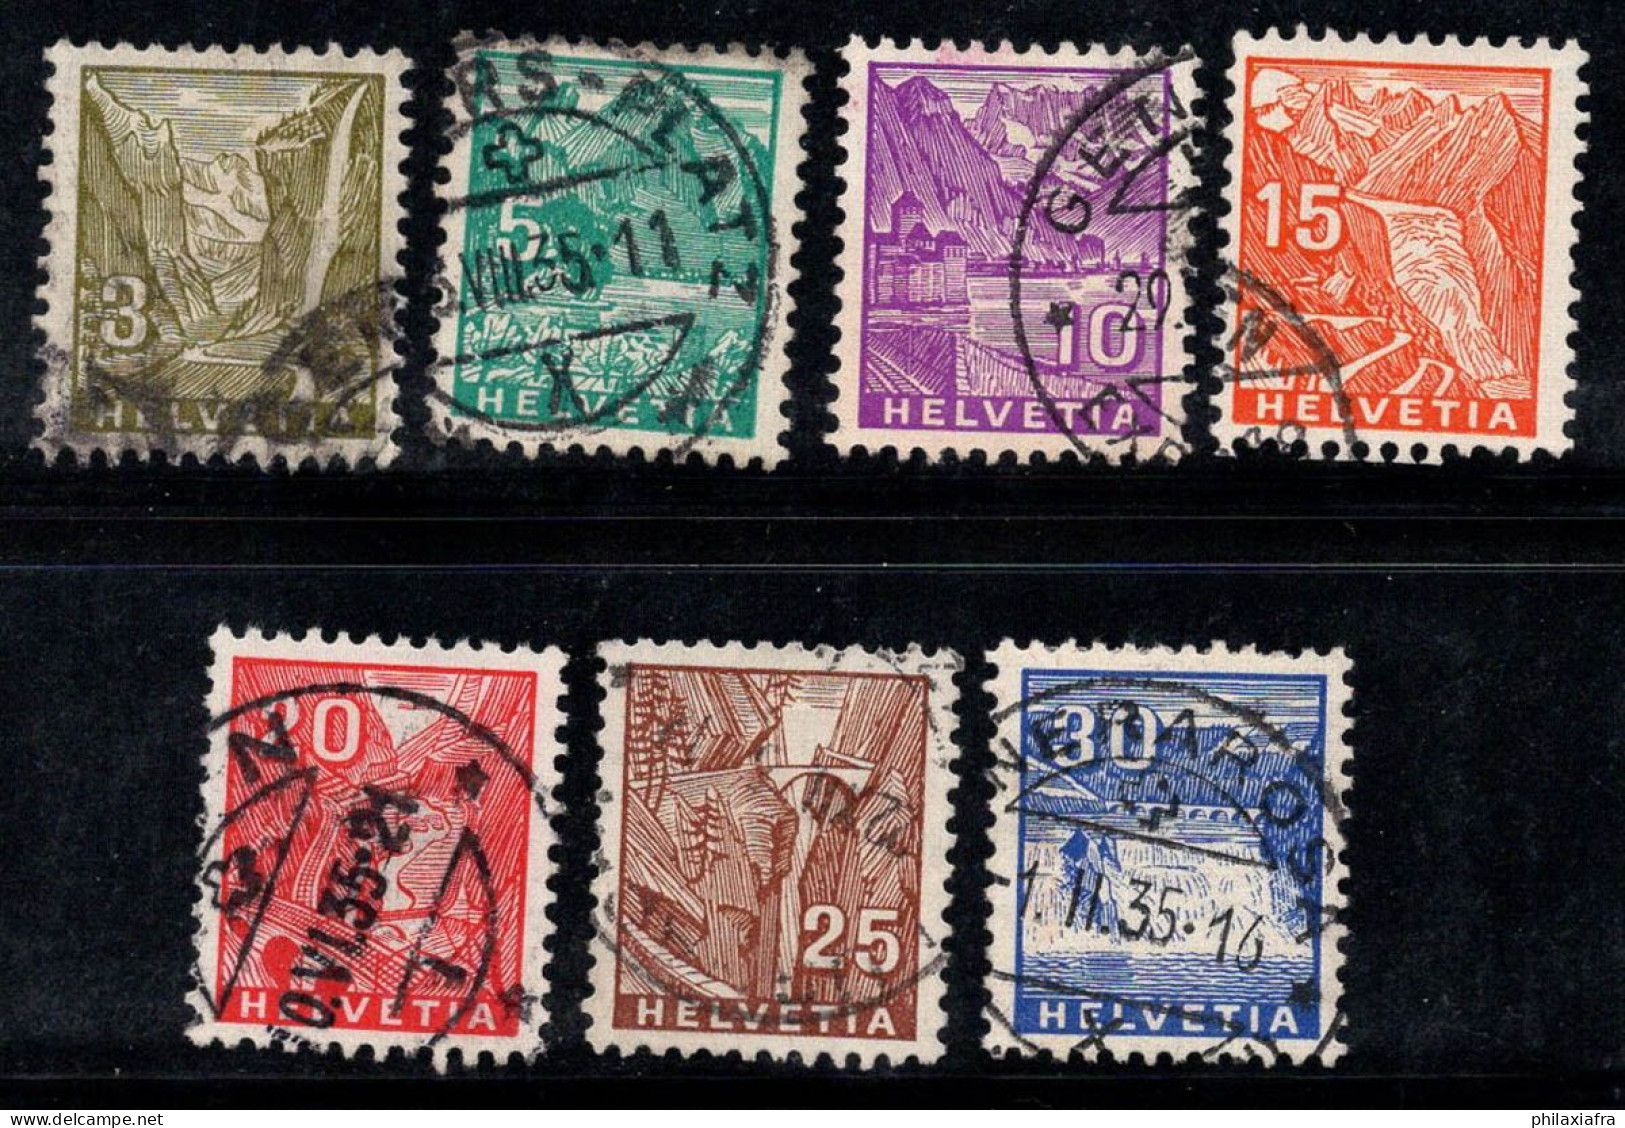 Suisse 1934 Mi. 270-276 Oblitéré 100% Paysages - Used Stamps